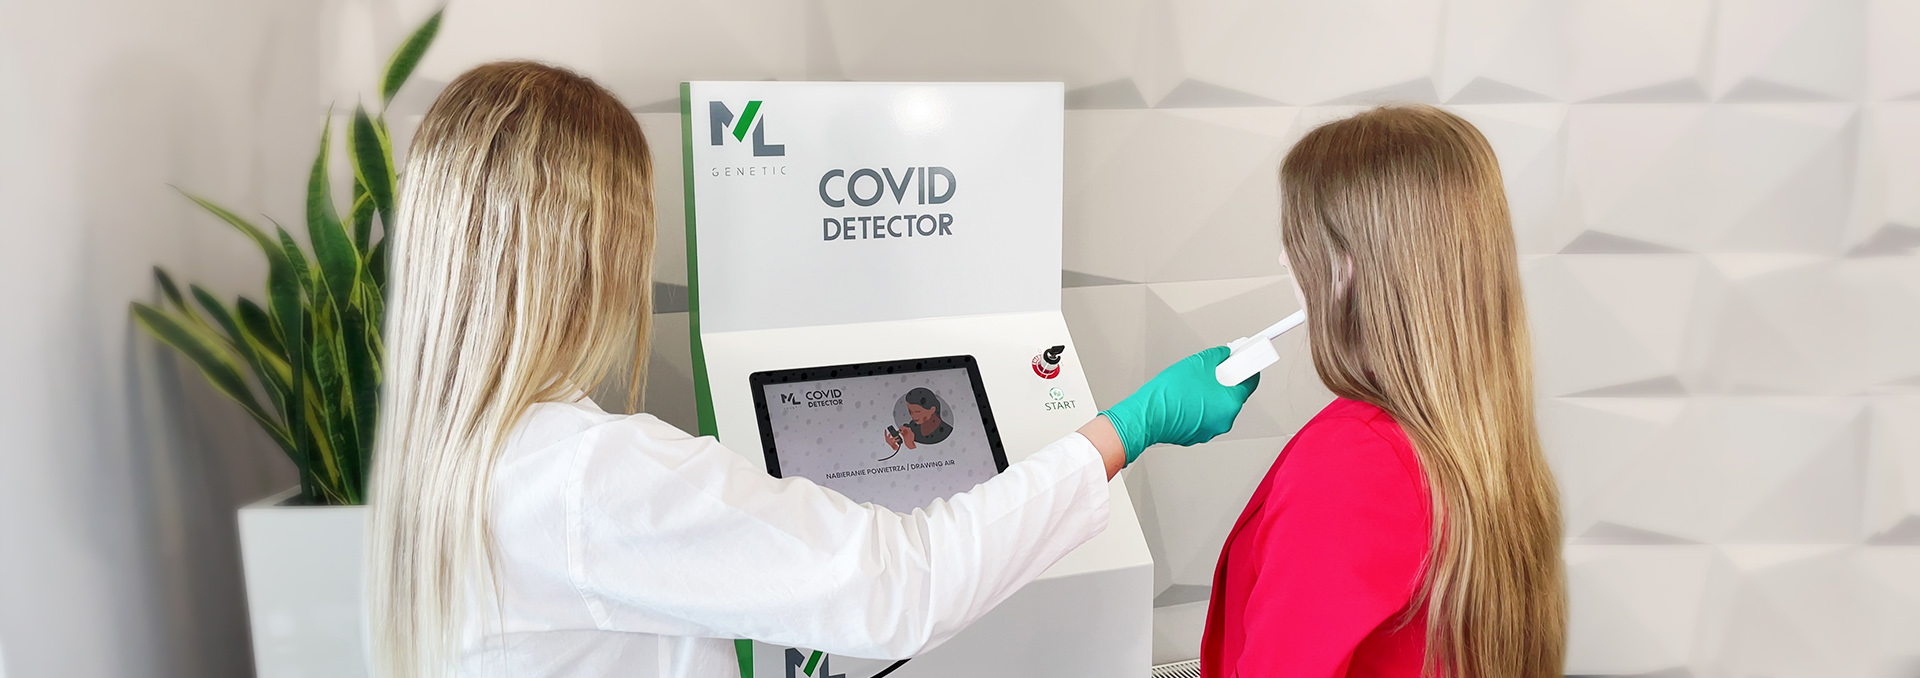 Covid_Detector_MLSystem